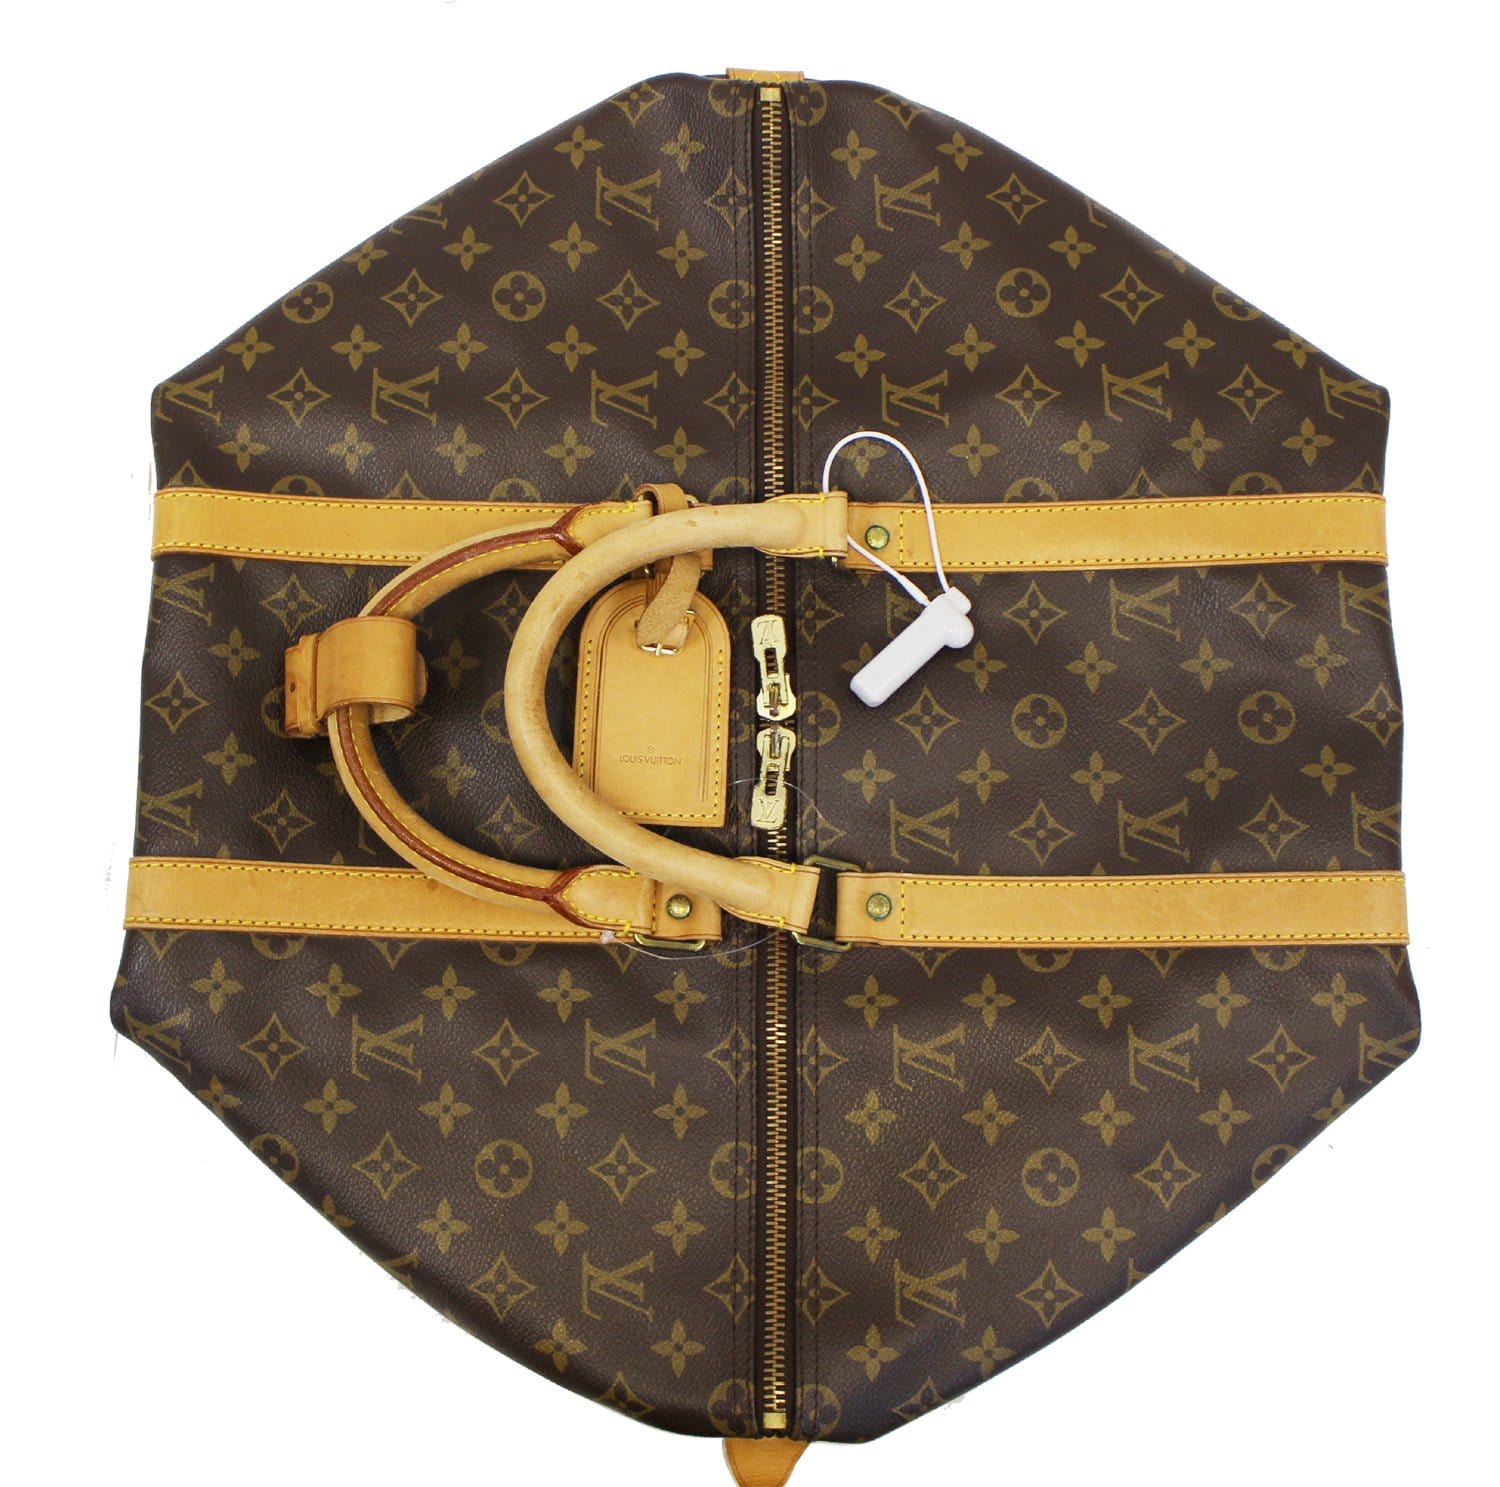 Louis Vuitton Keepall 50 Travel Bag, In A Brown